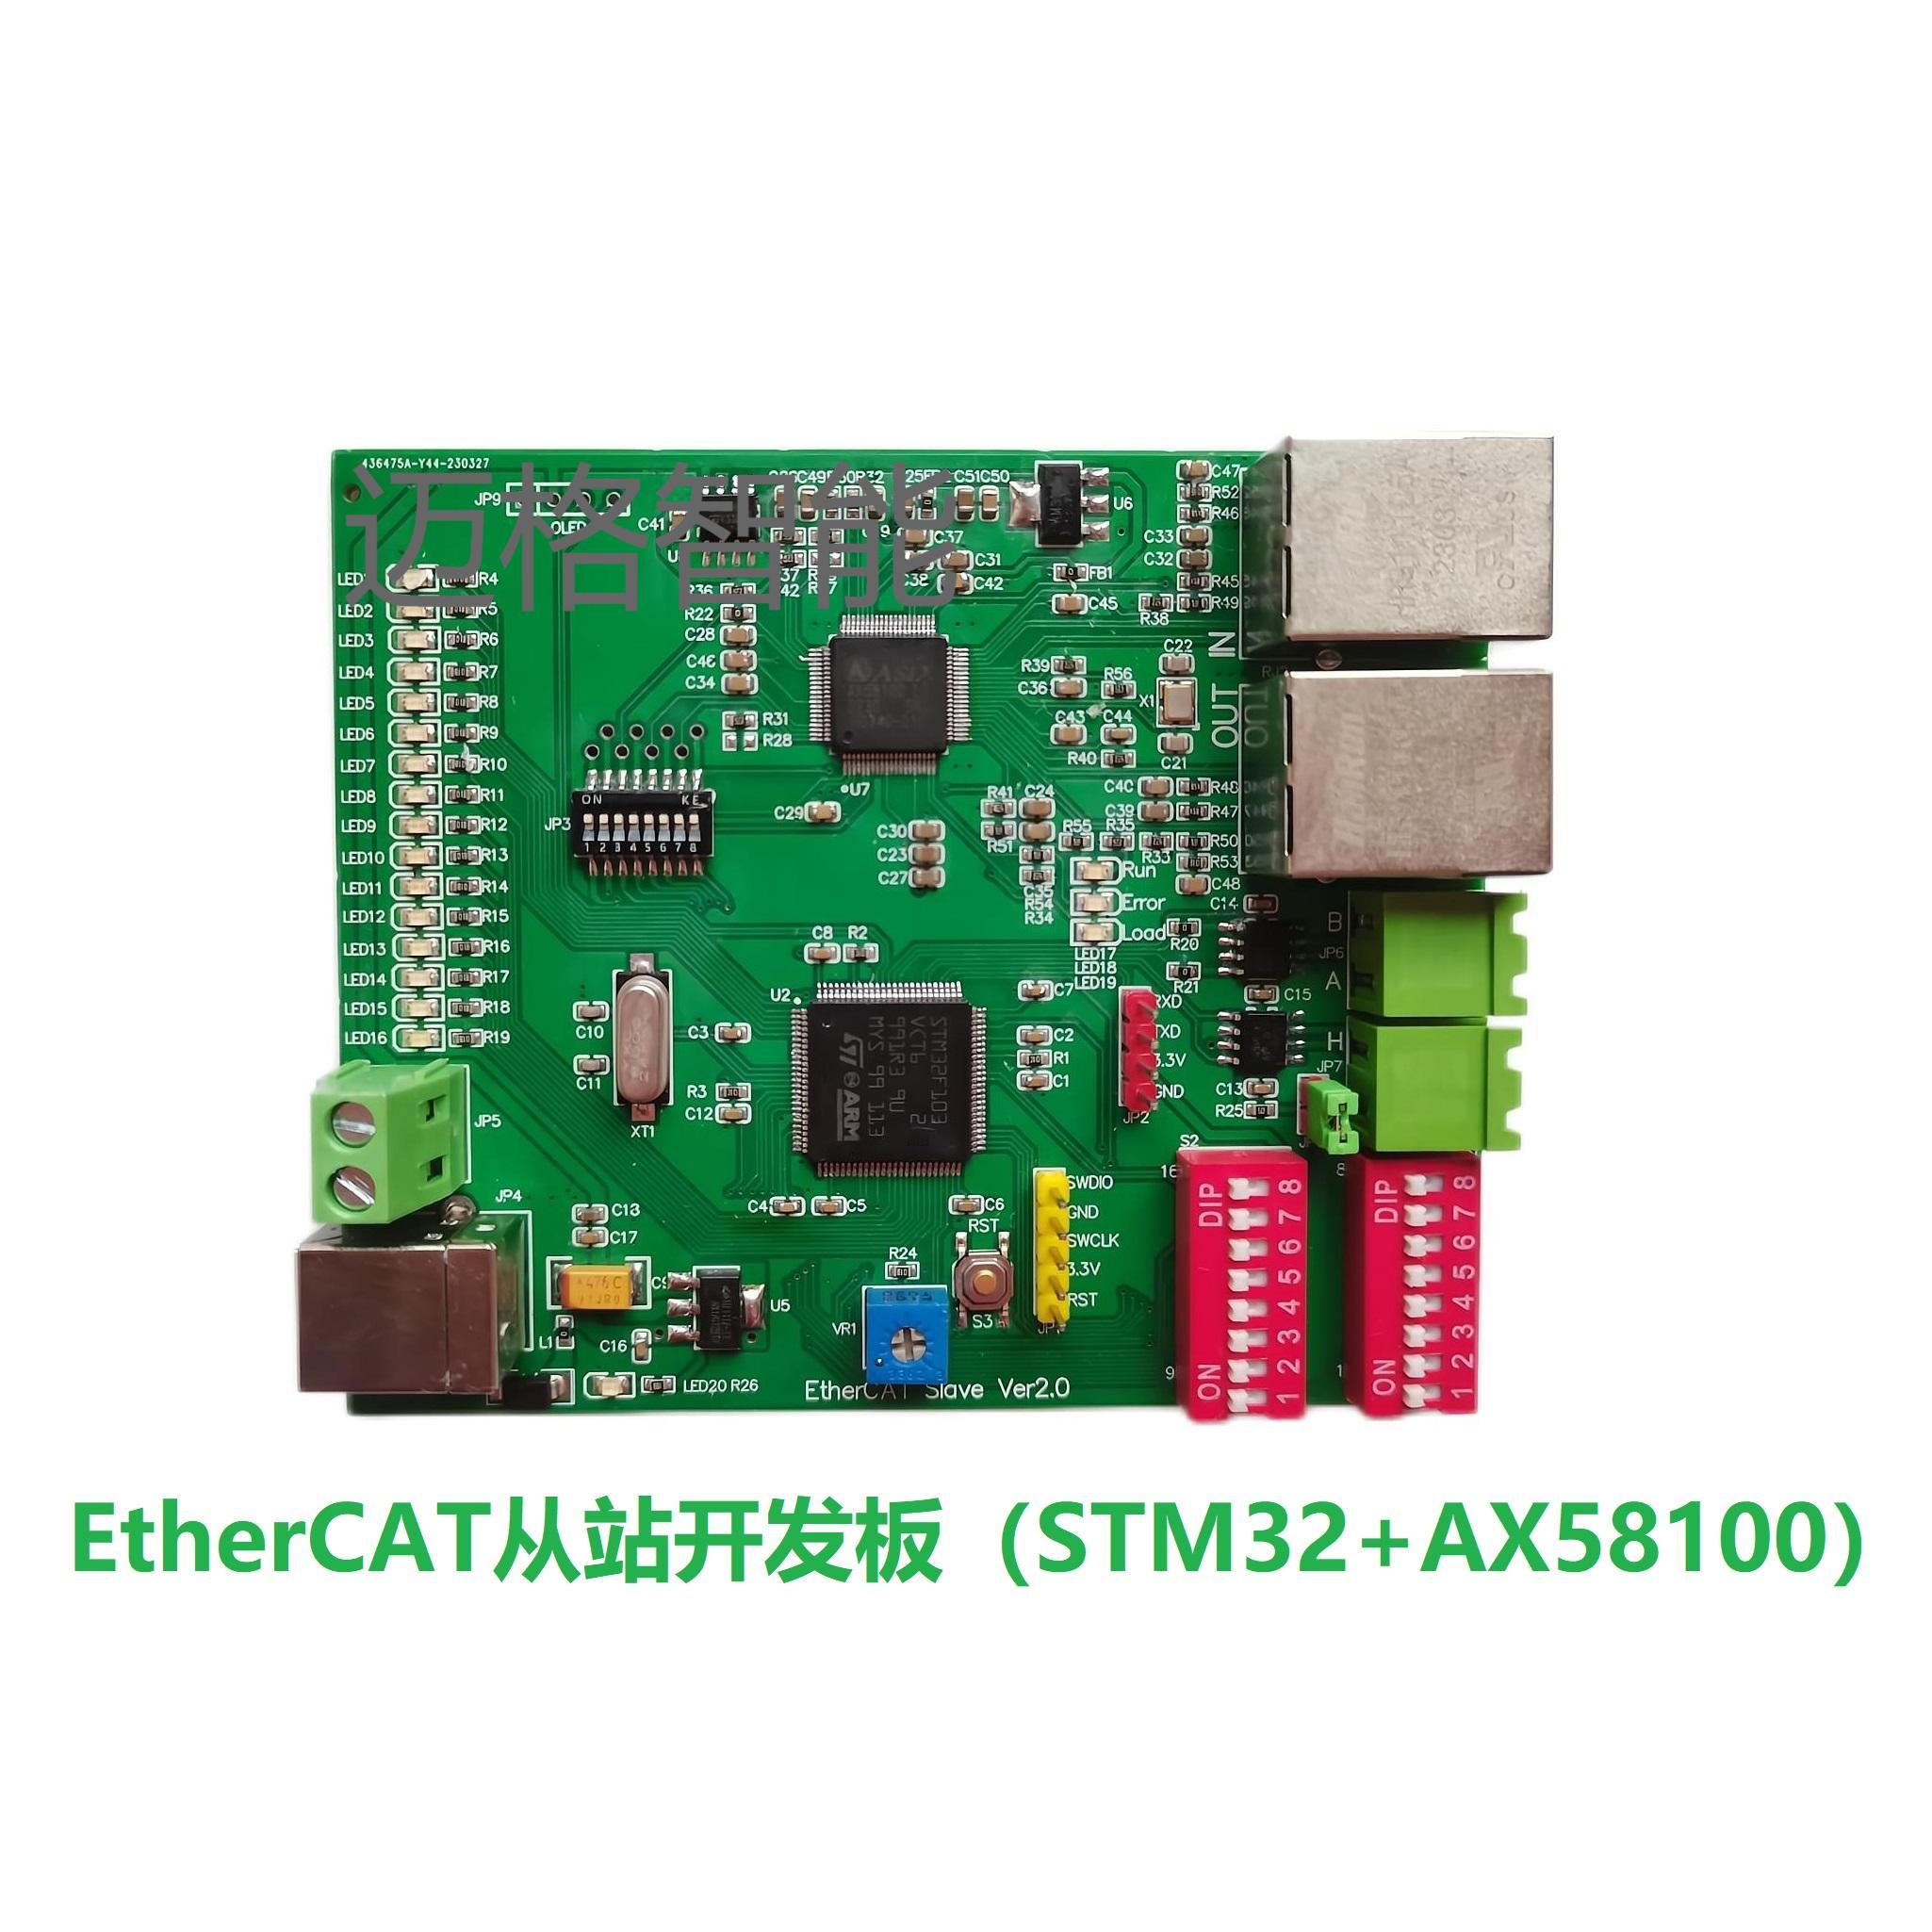 EtherCAT开发板从站、主站 基于STM32+AX58100/LAN9252 - 图0